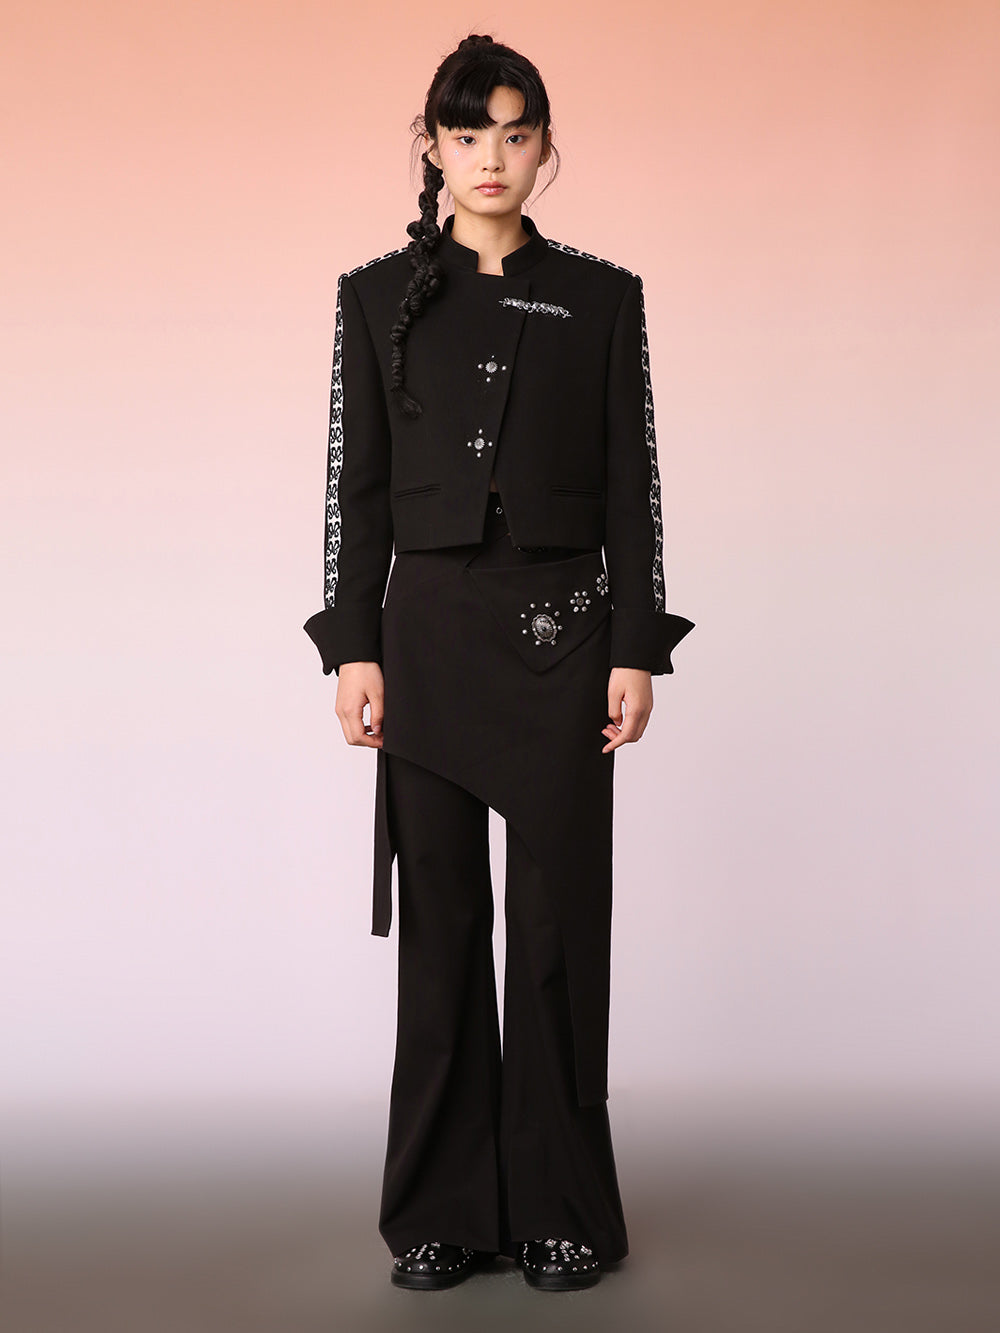 MUKZIN Black Fashion Stud Cropped Jacket